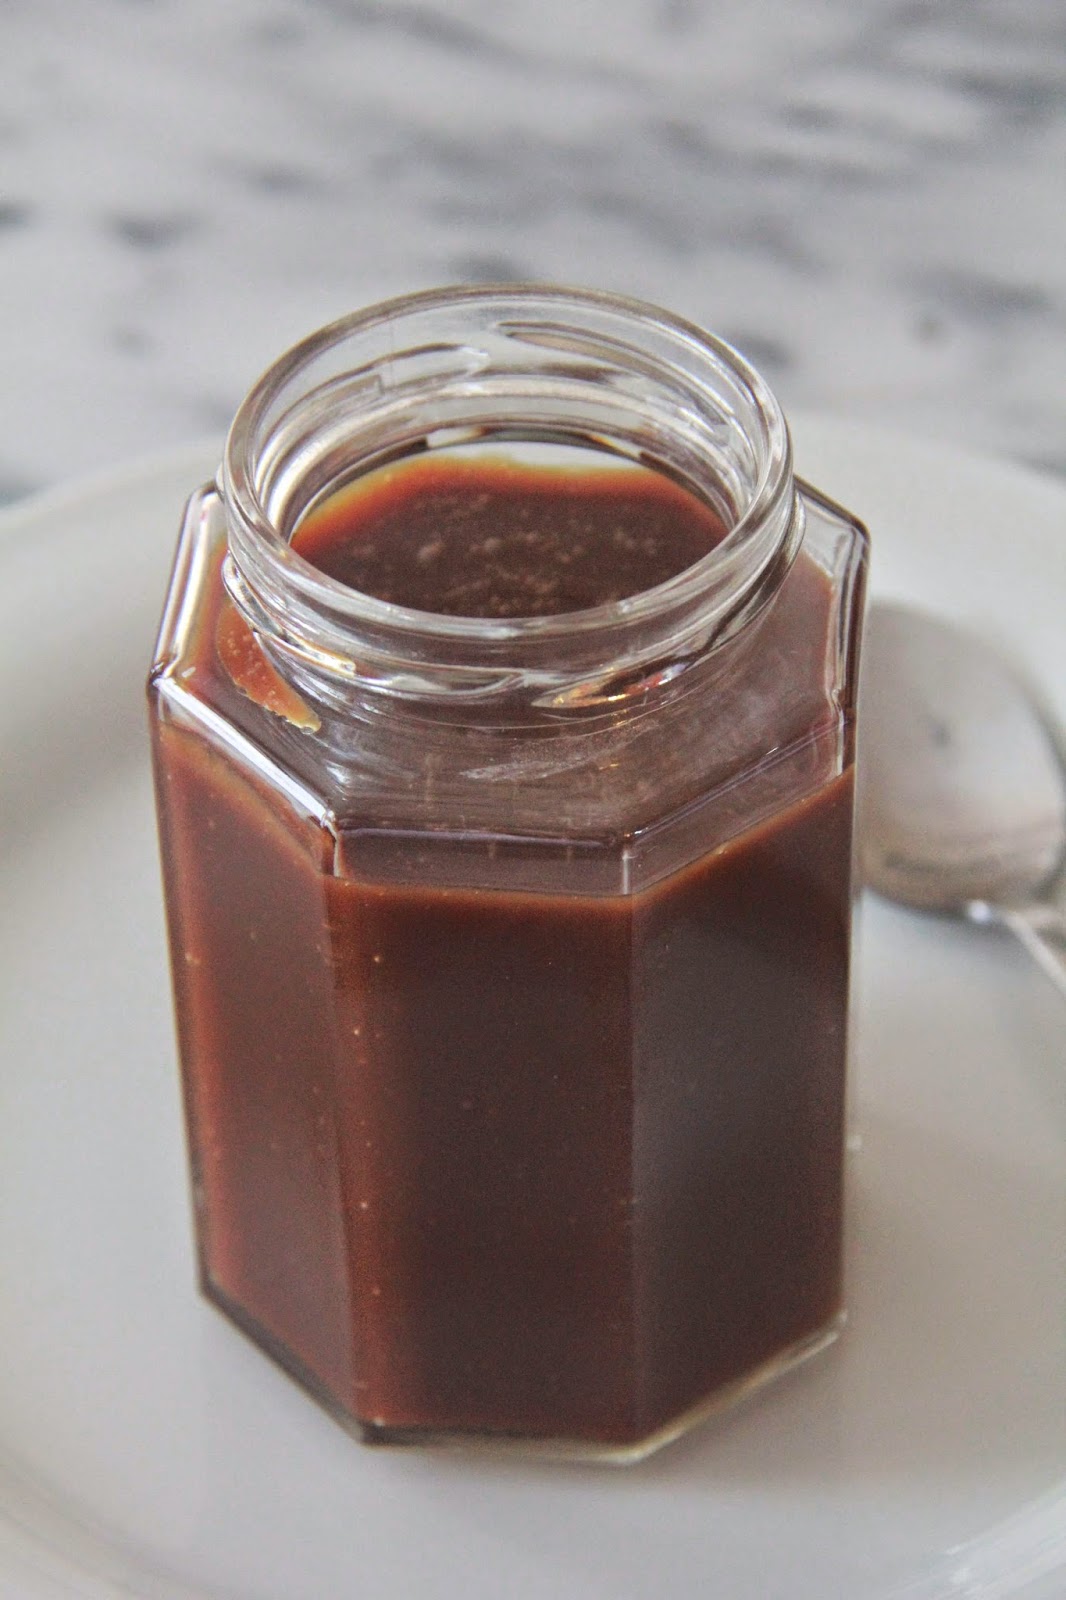 Simple Indulgence: Sweet & Salty - Salted Caramel Sauce